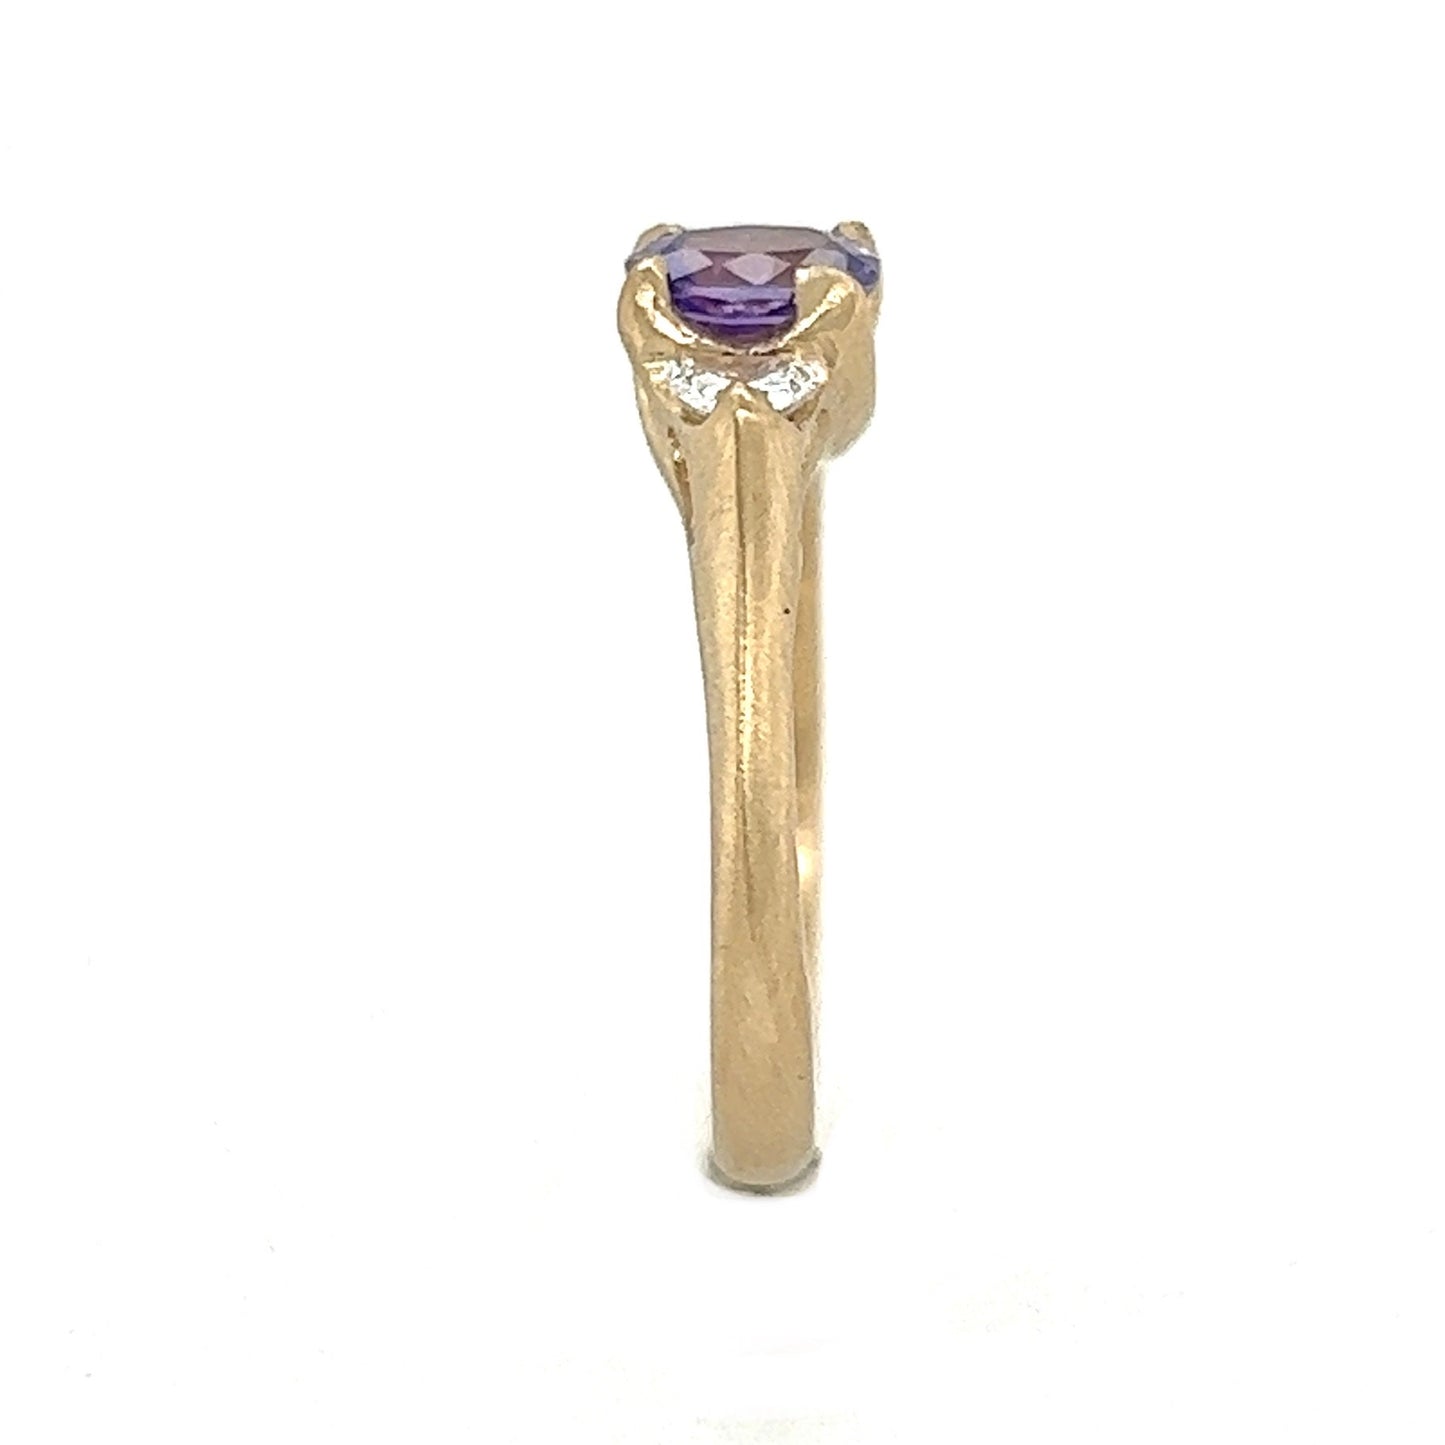 The Woven 3 Stone- Purple Sapphire & LAB diamonds